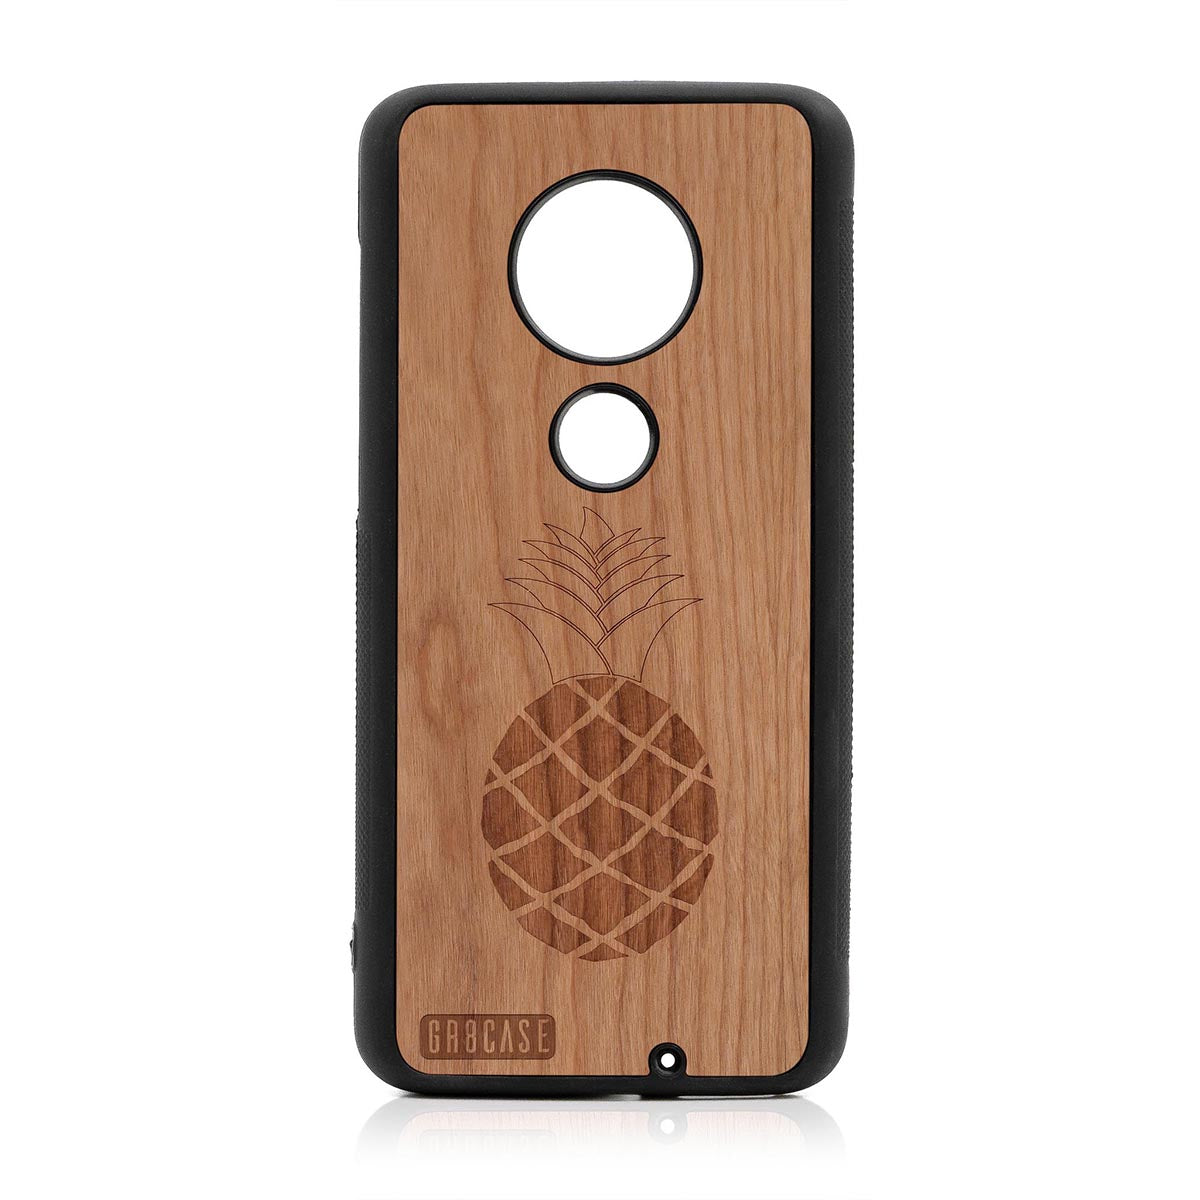 Pineapple Design Wood Case Moto G7 Plus by GR8CASE